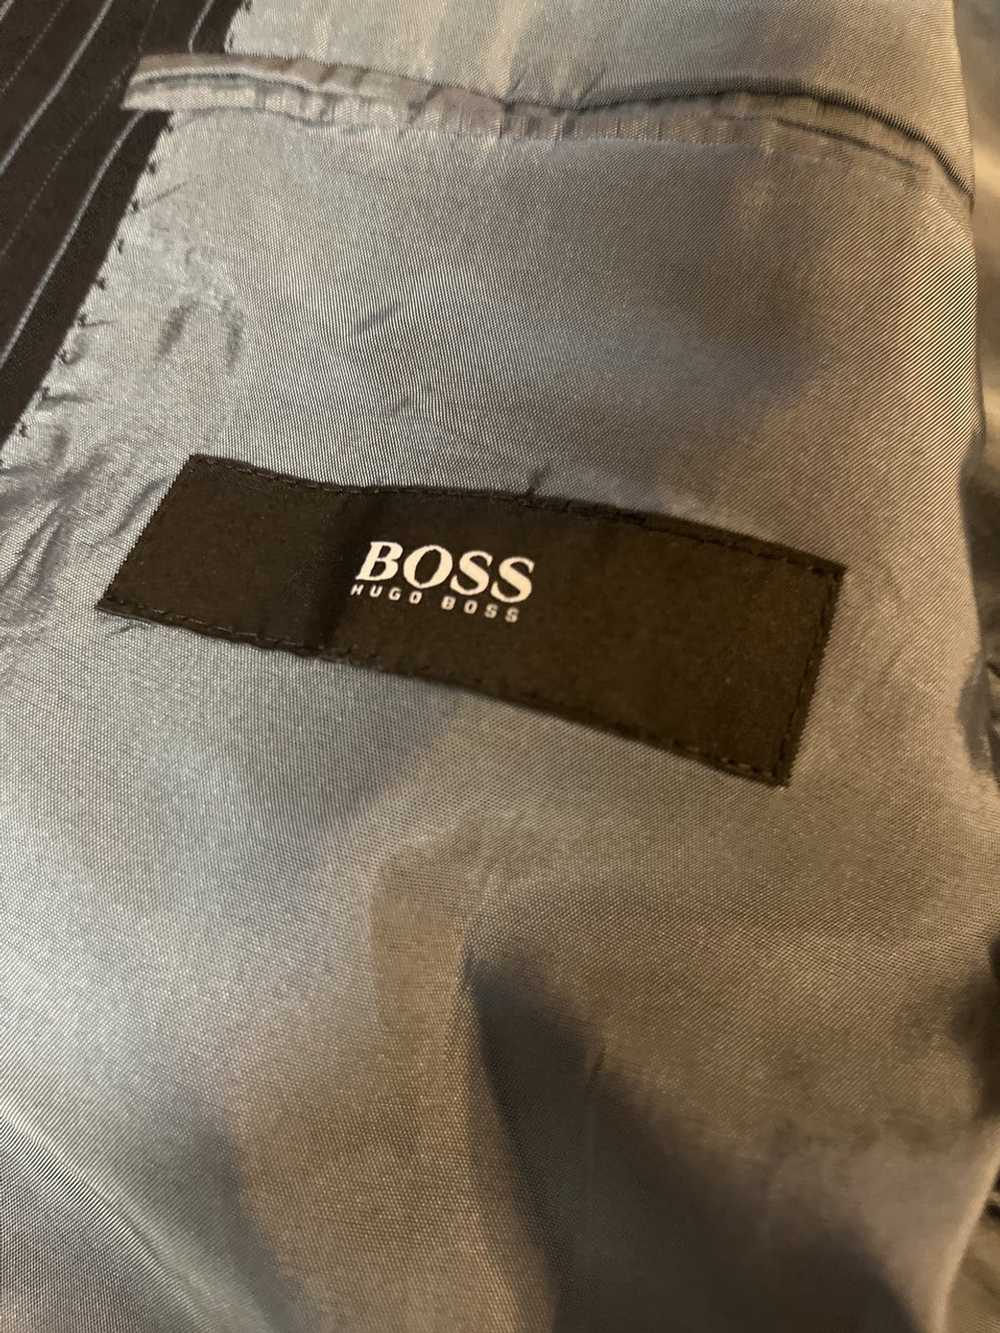 Hugo Boss Hugo Boss Striped Suit Jacket - image 9